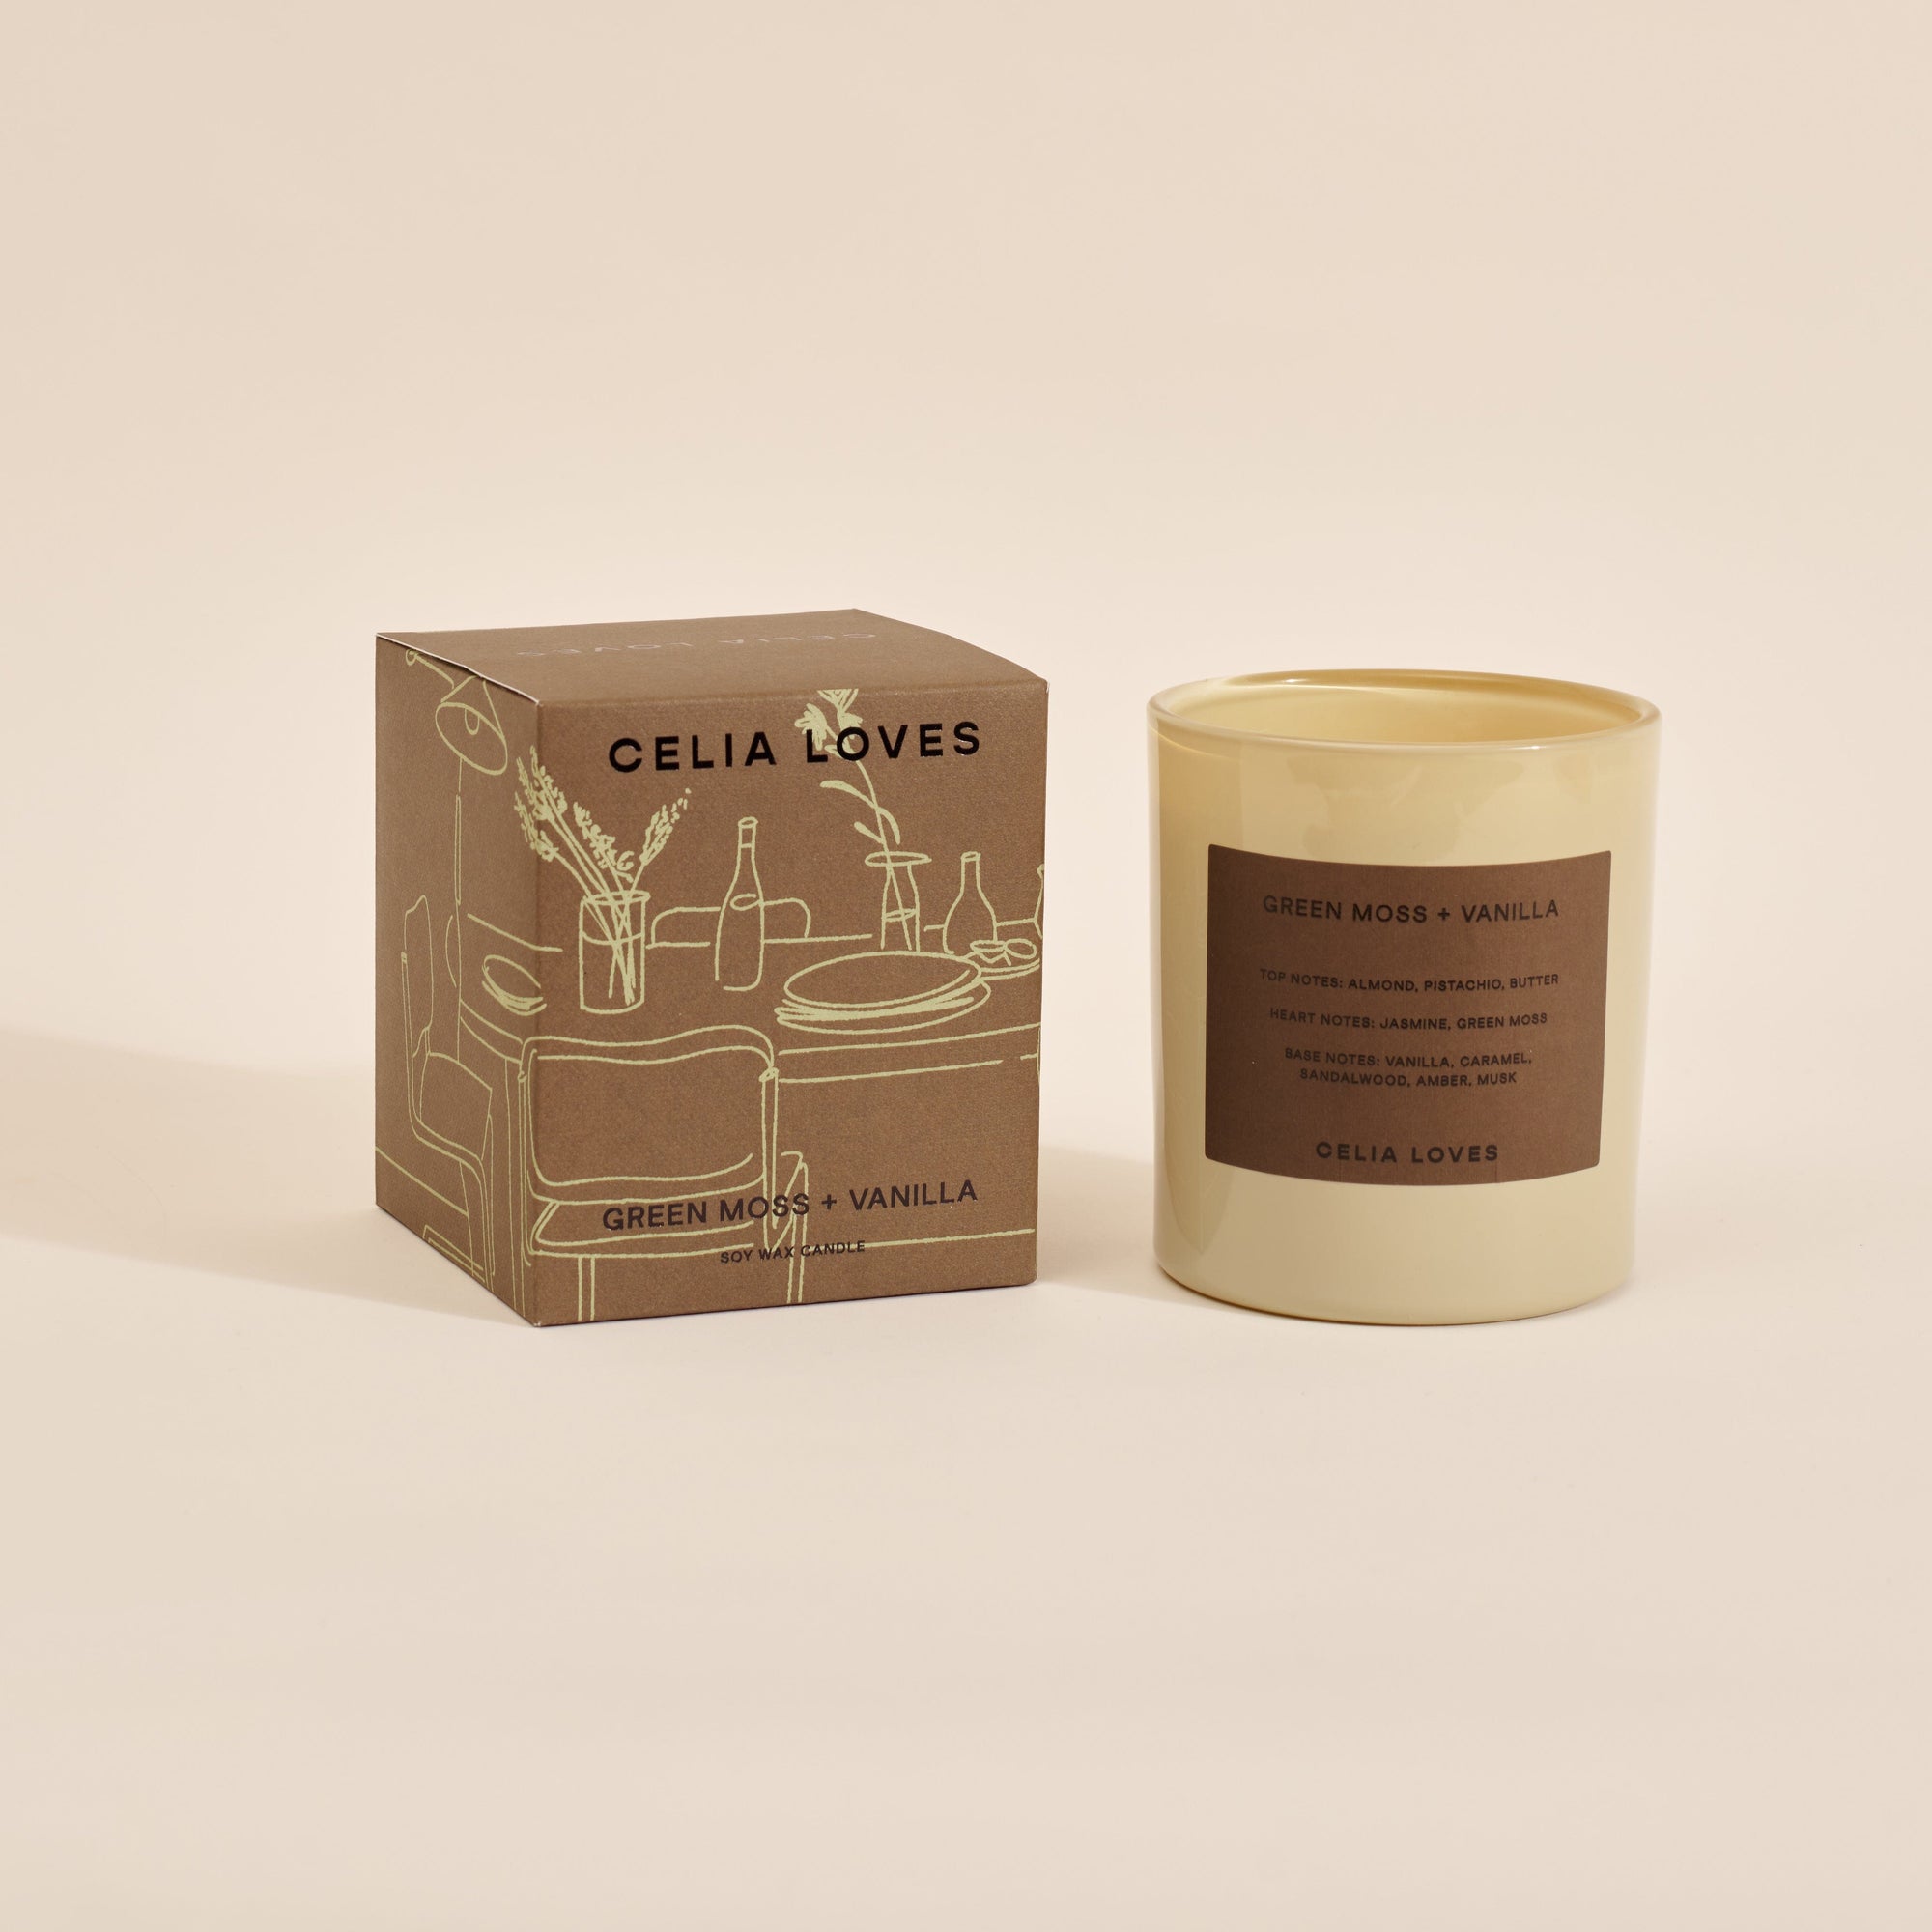 Celia Loves Green Moss + Vanilla Candle